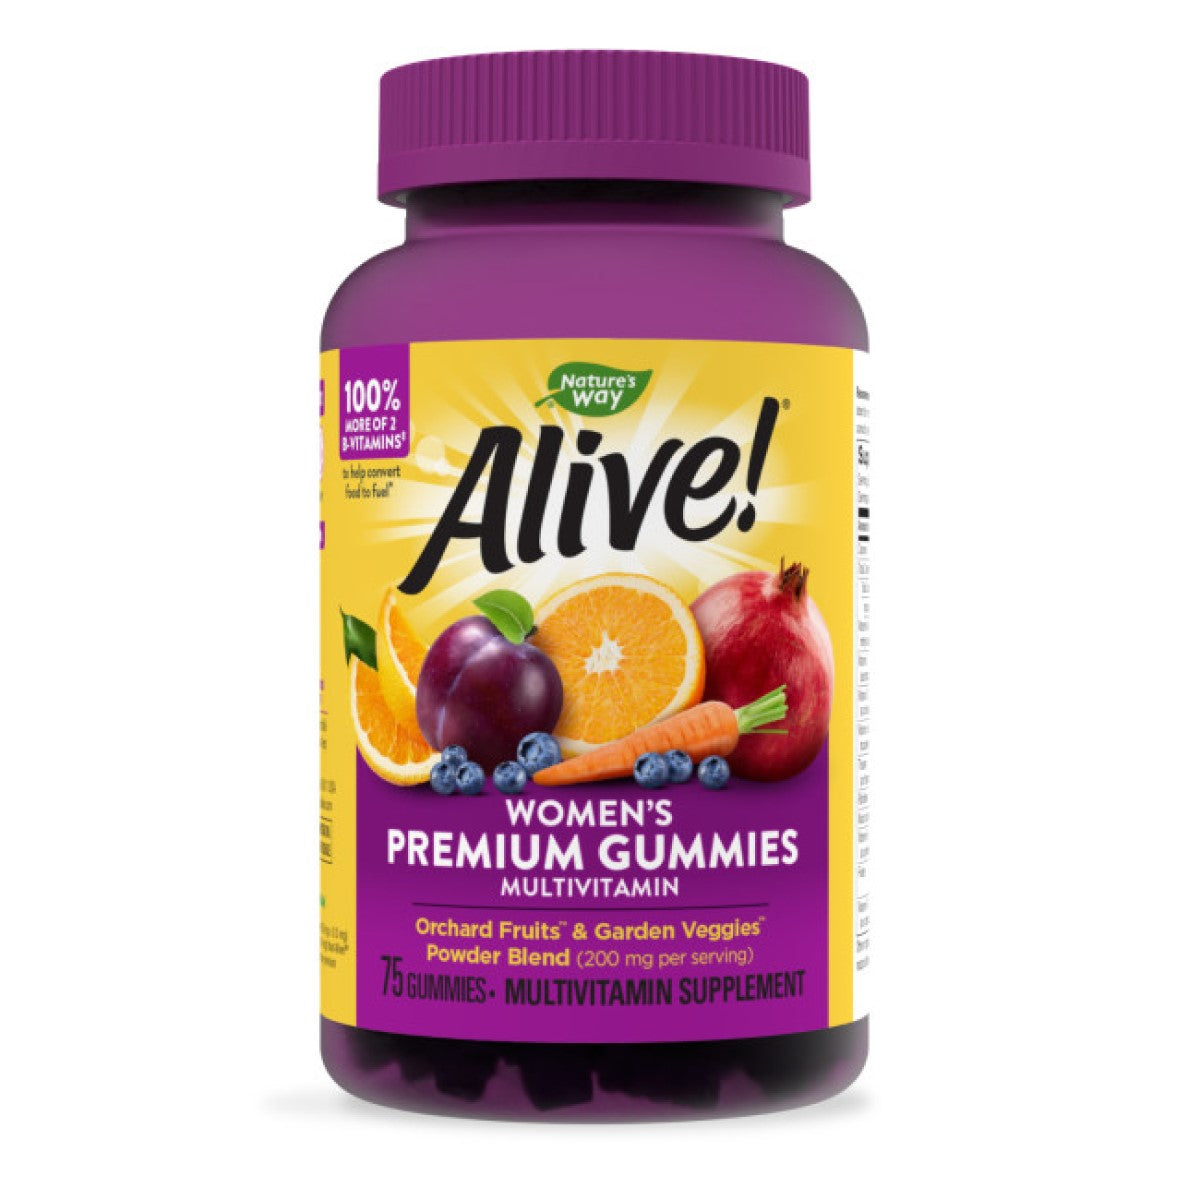 Primary image of Alive! Women's Gummy Vitamins